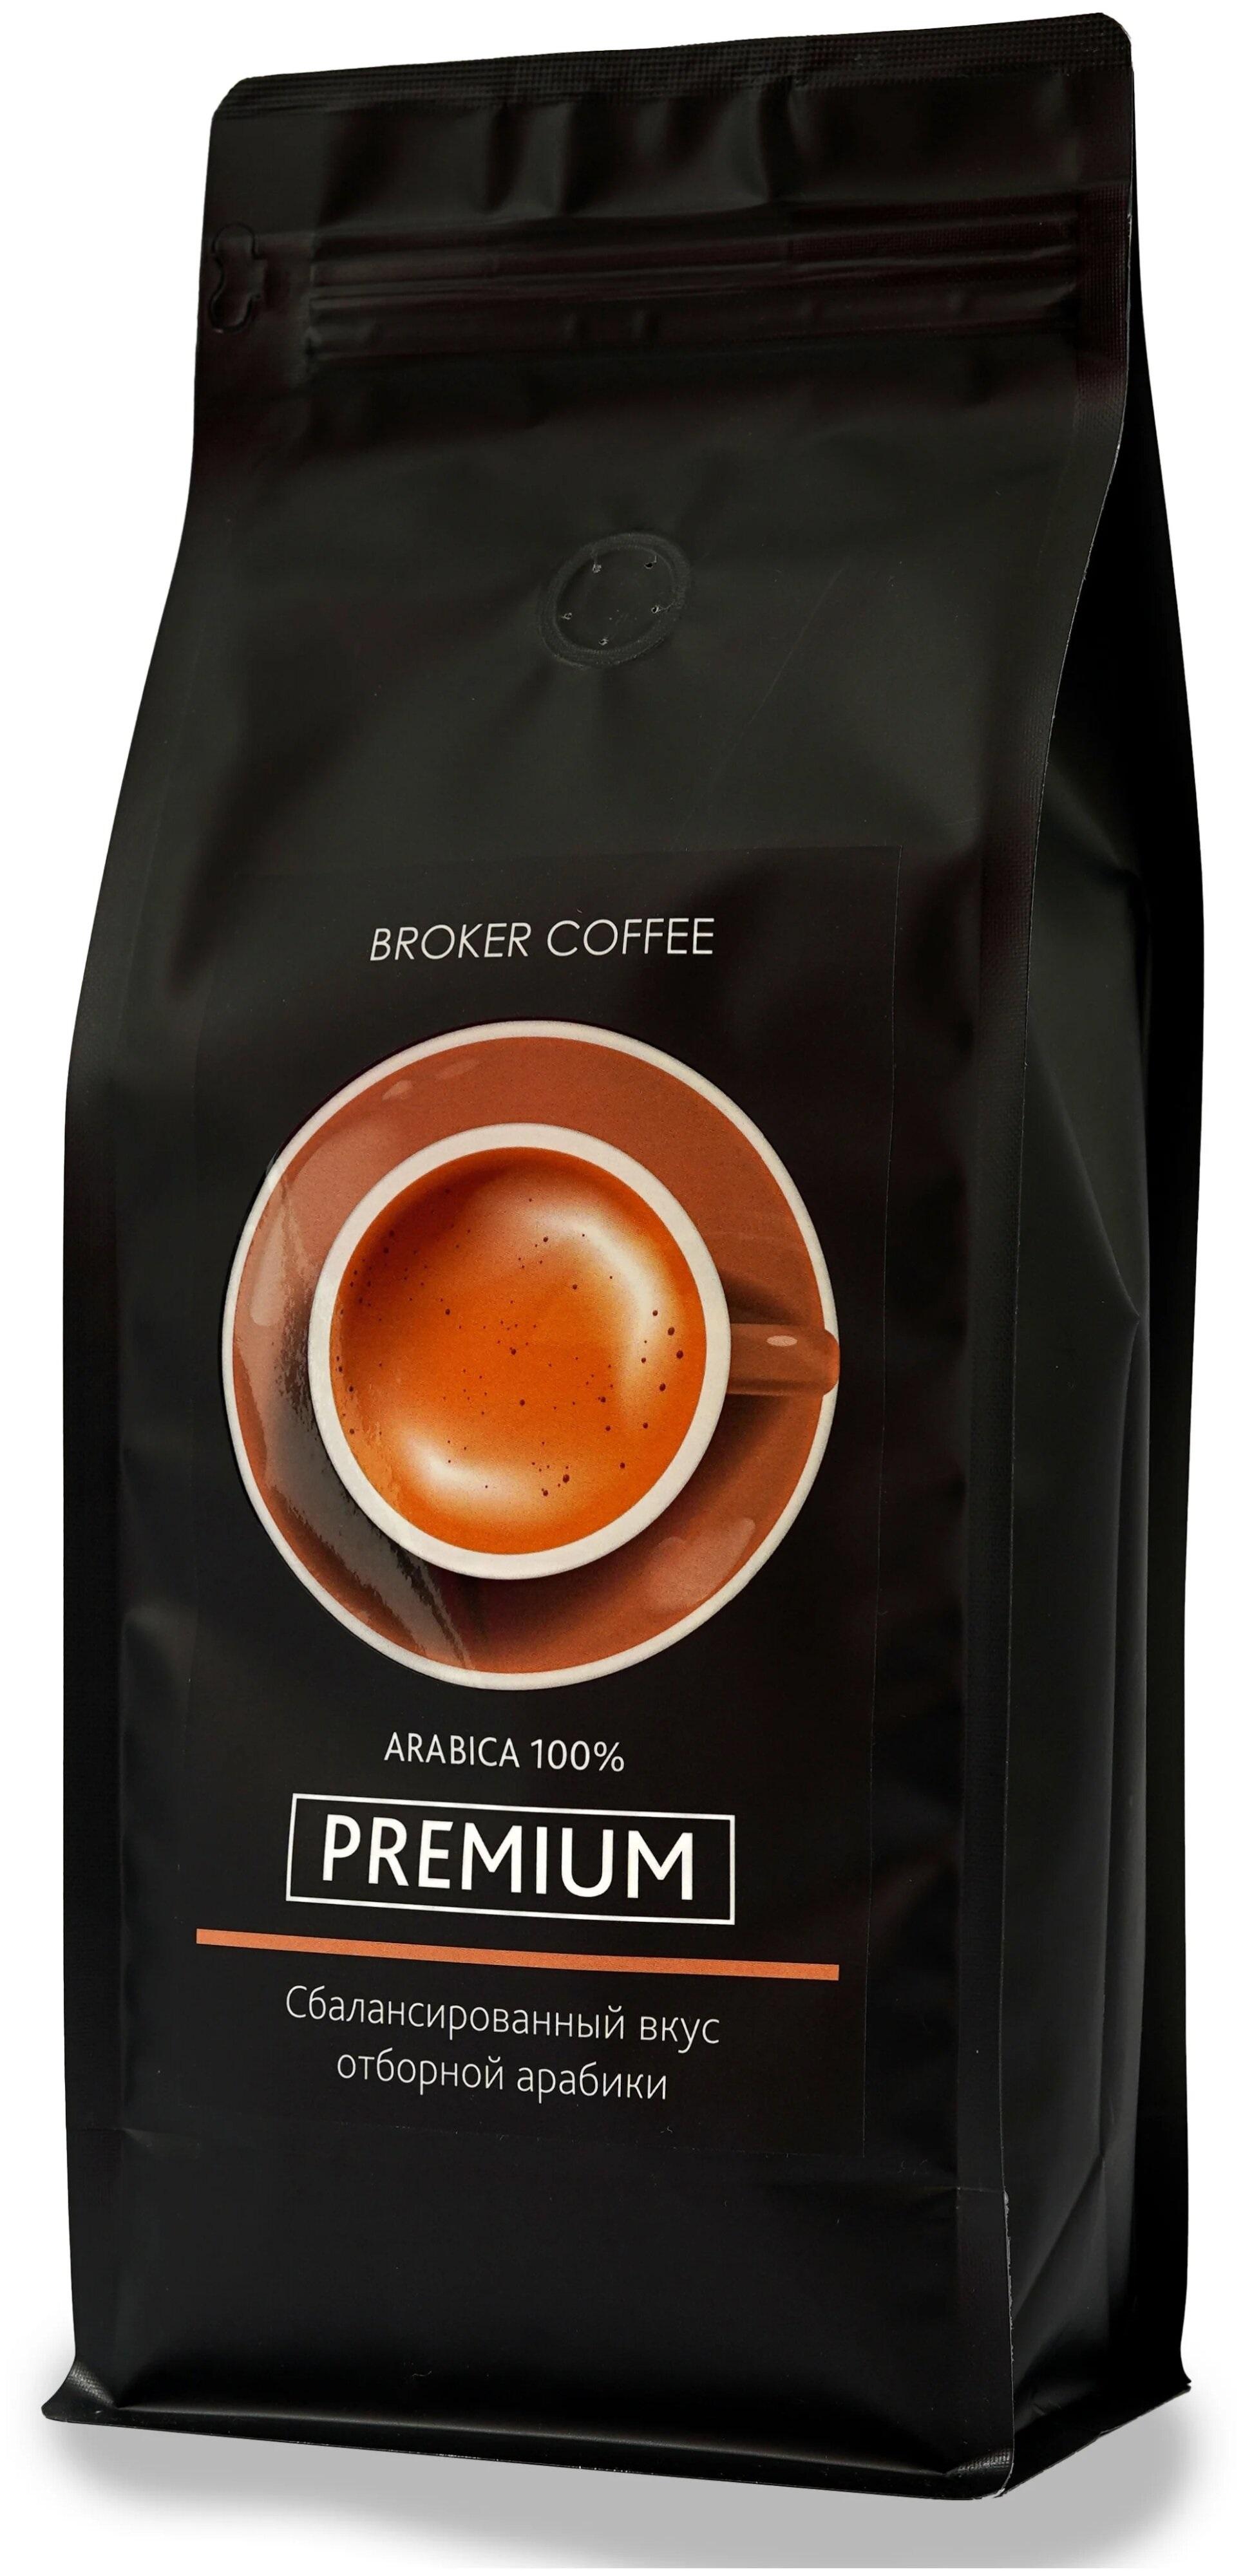 Broker coffee Premium